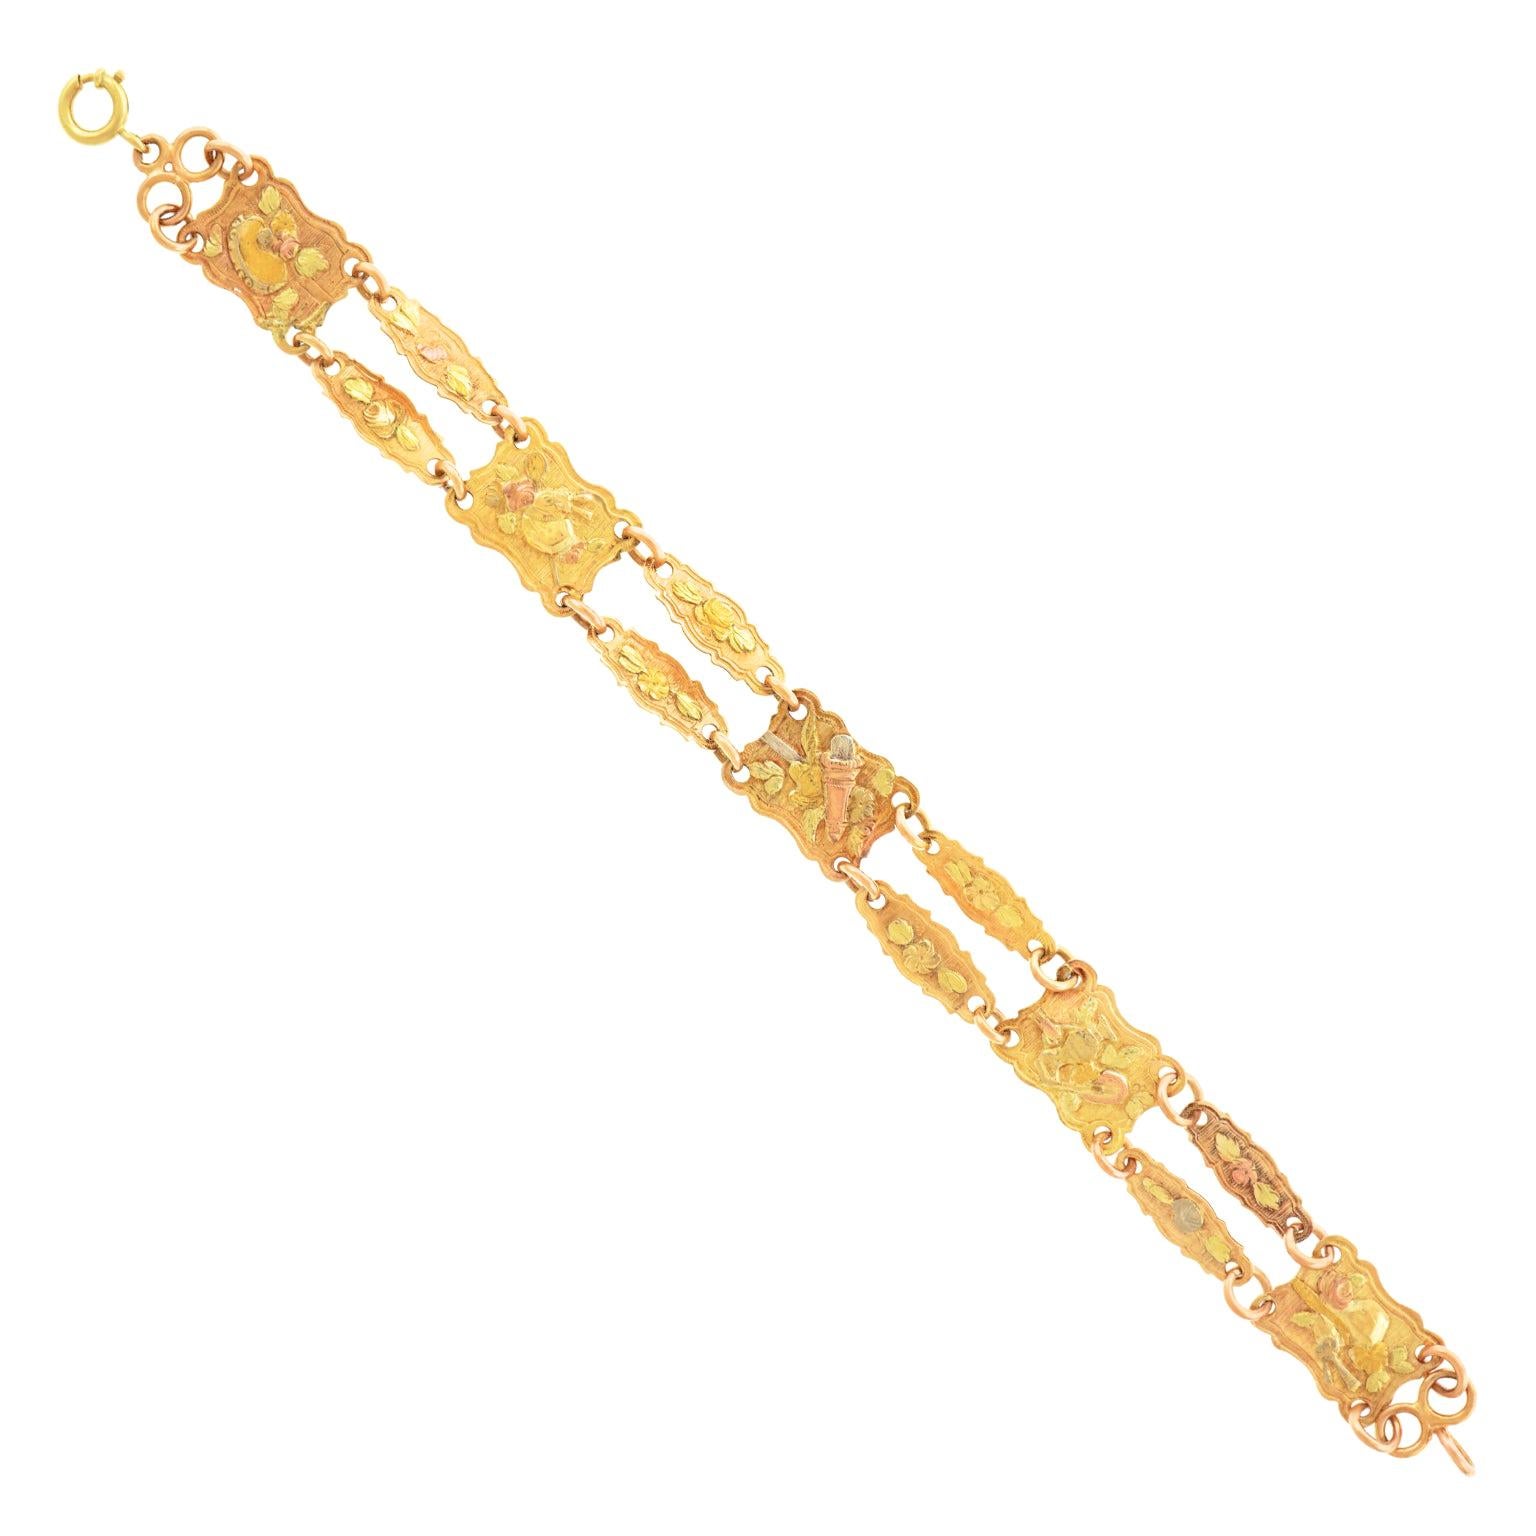 Antique Venetian Gold Bracelet with Spectacular Charm